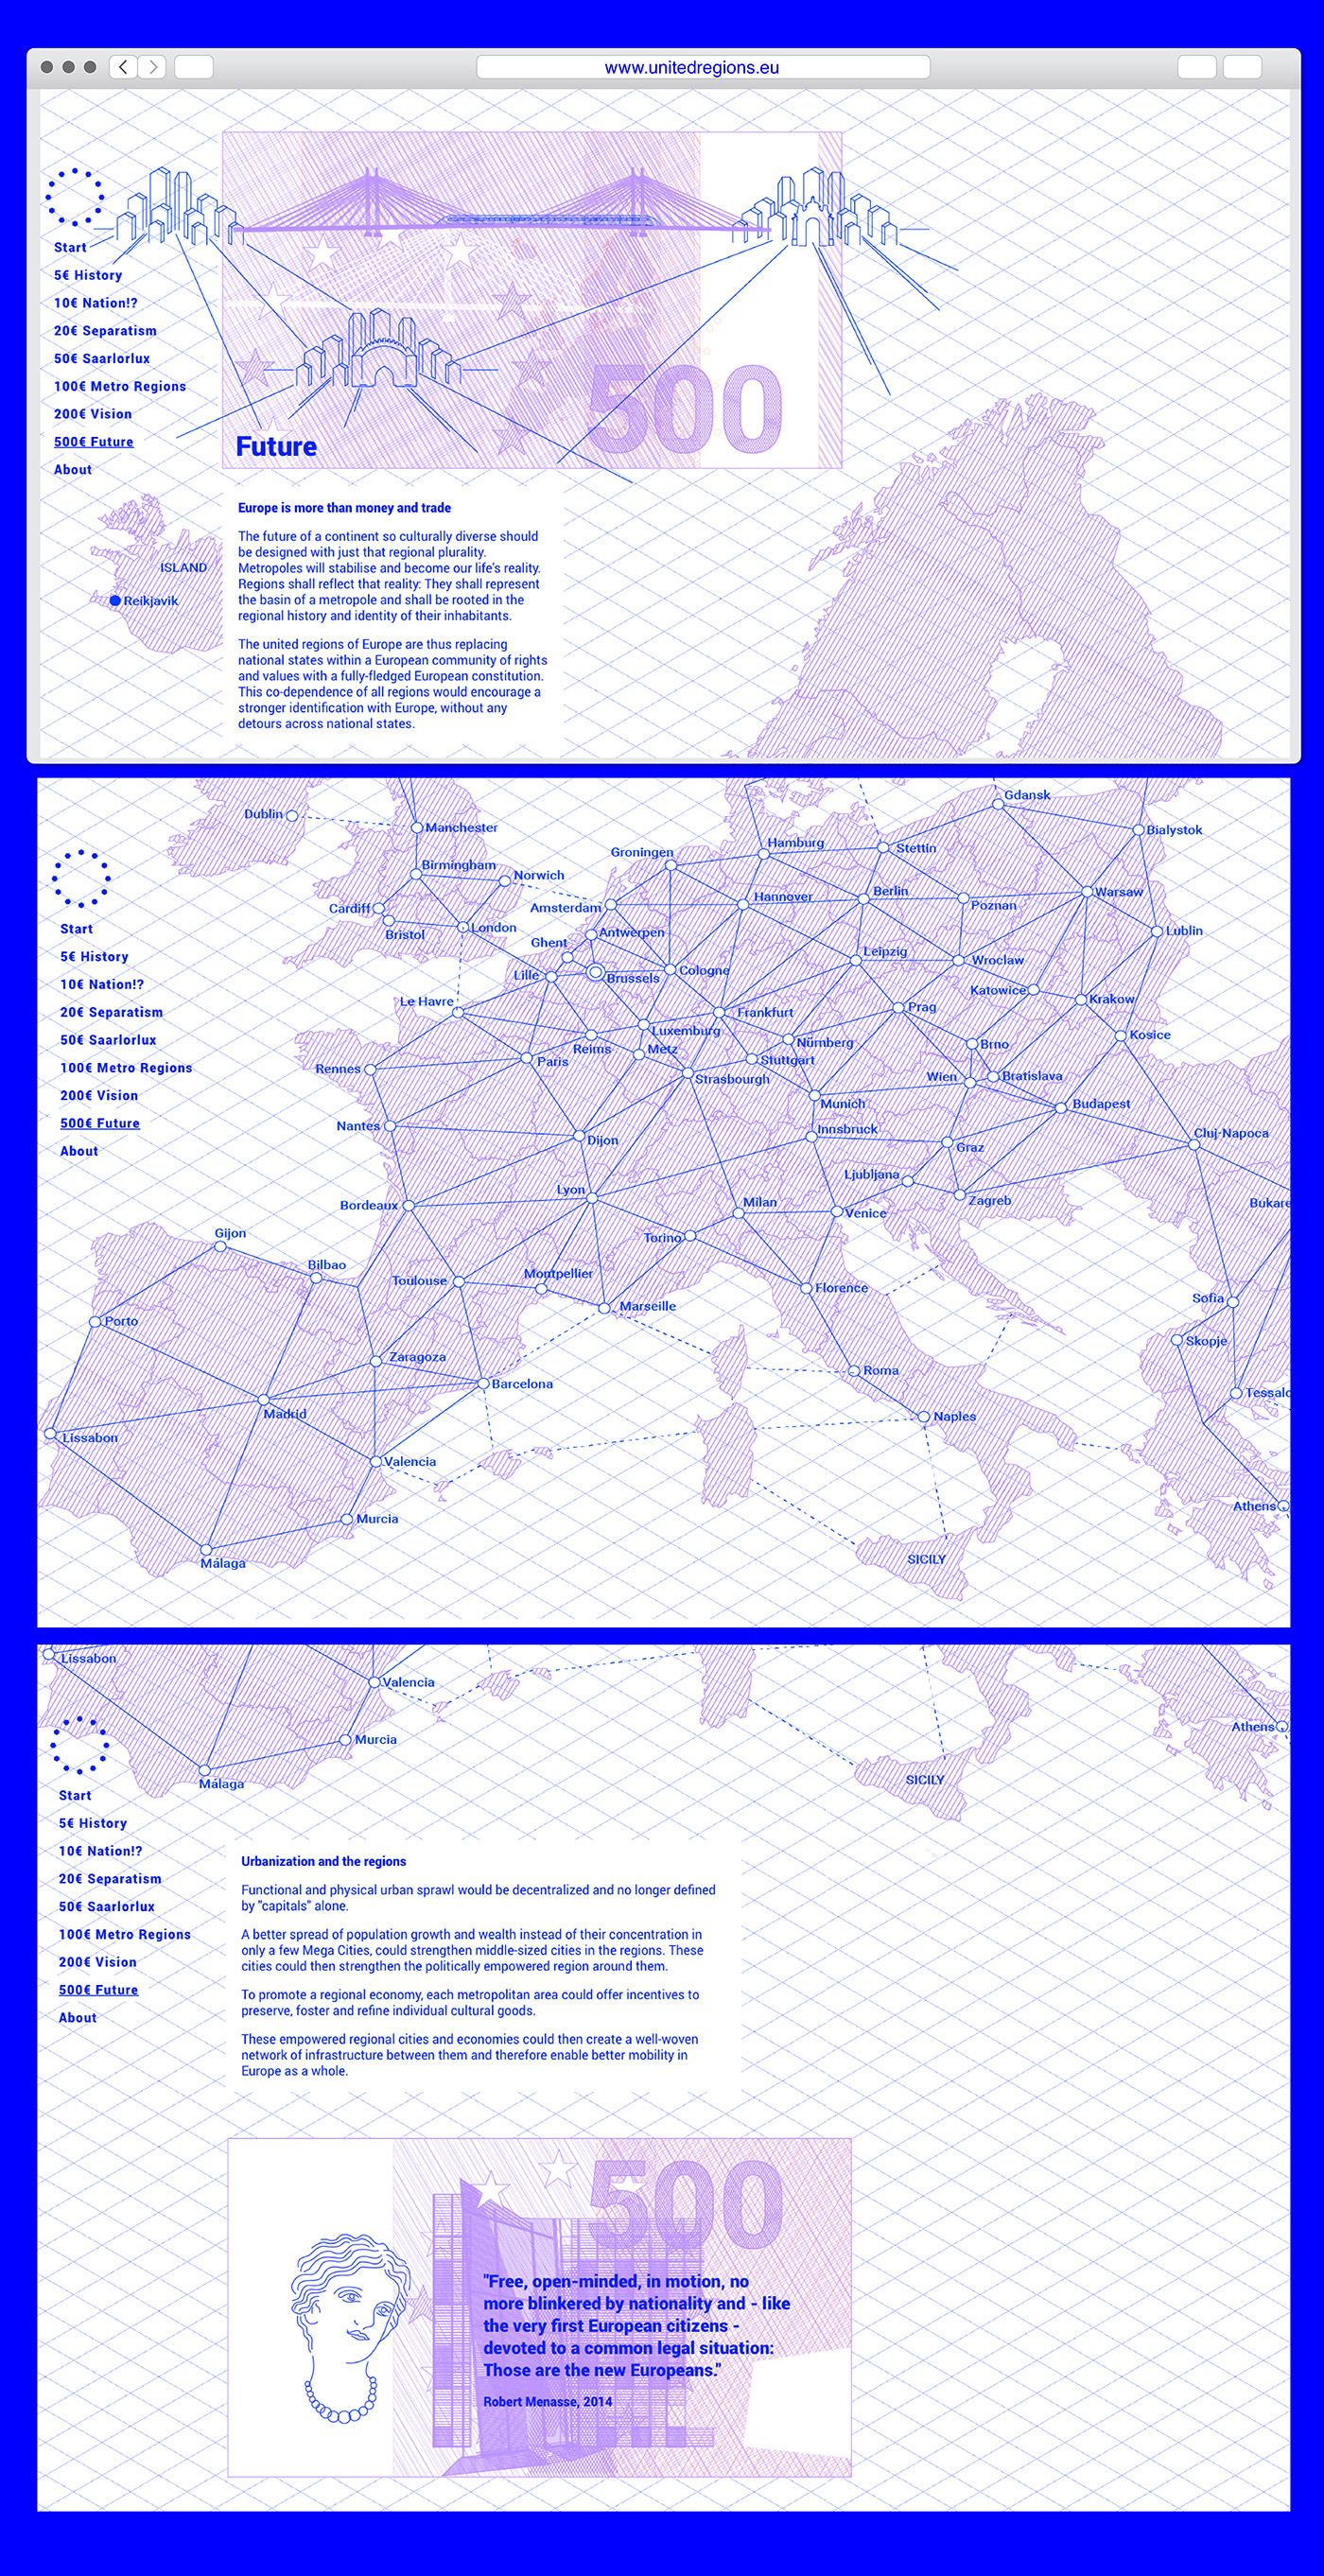 infographic Europe arch+ planetary urbanism United Regions EU vision future